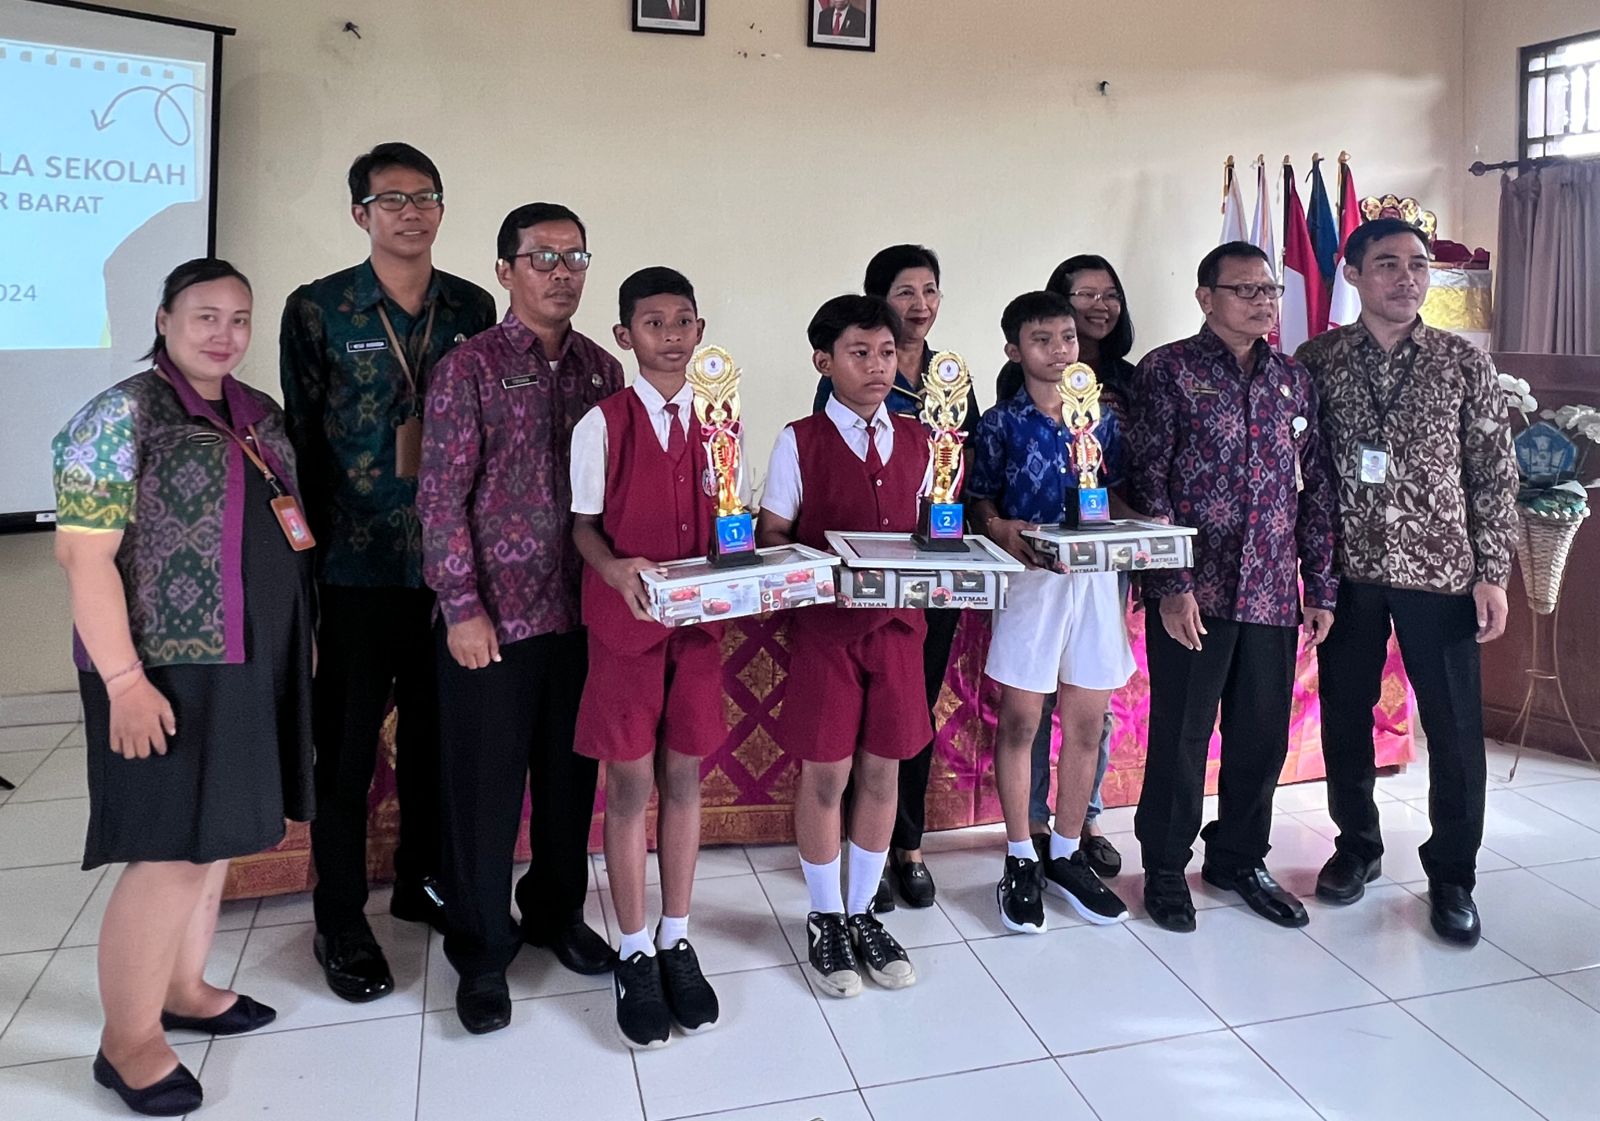 Rapat Kelompok Kerja Kepala Sekolah Sekolah Dasar Kecamatan Denpasar Barat